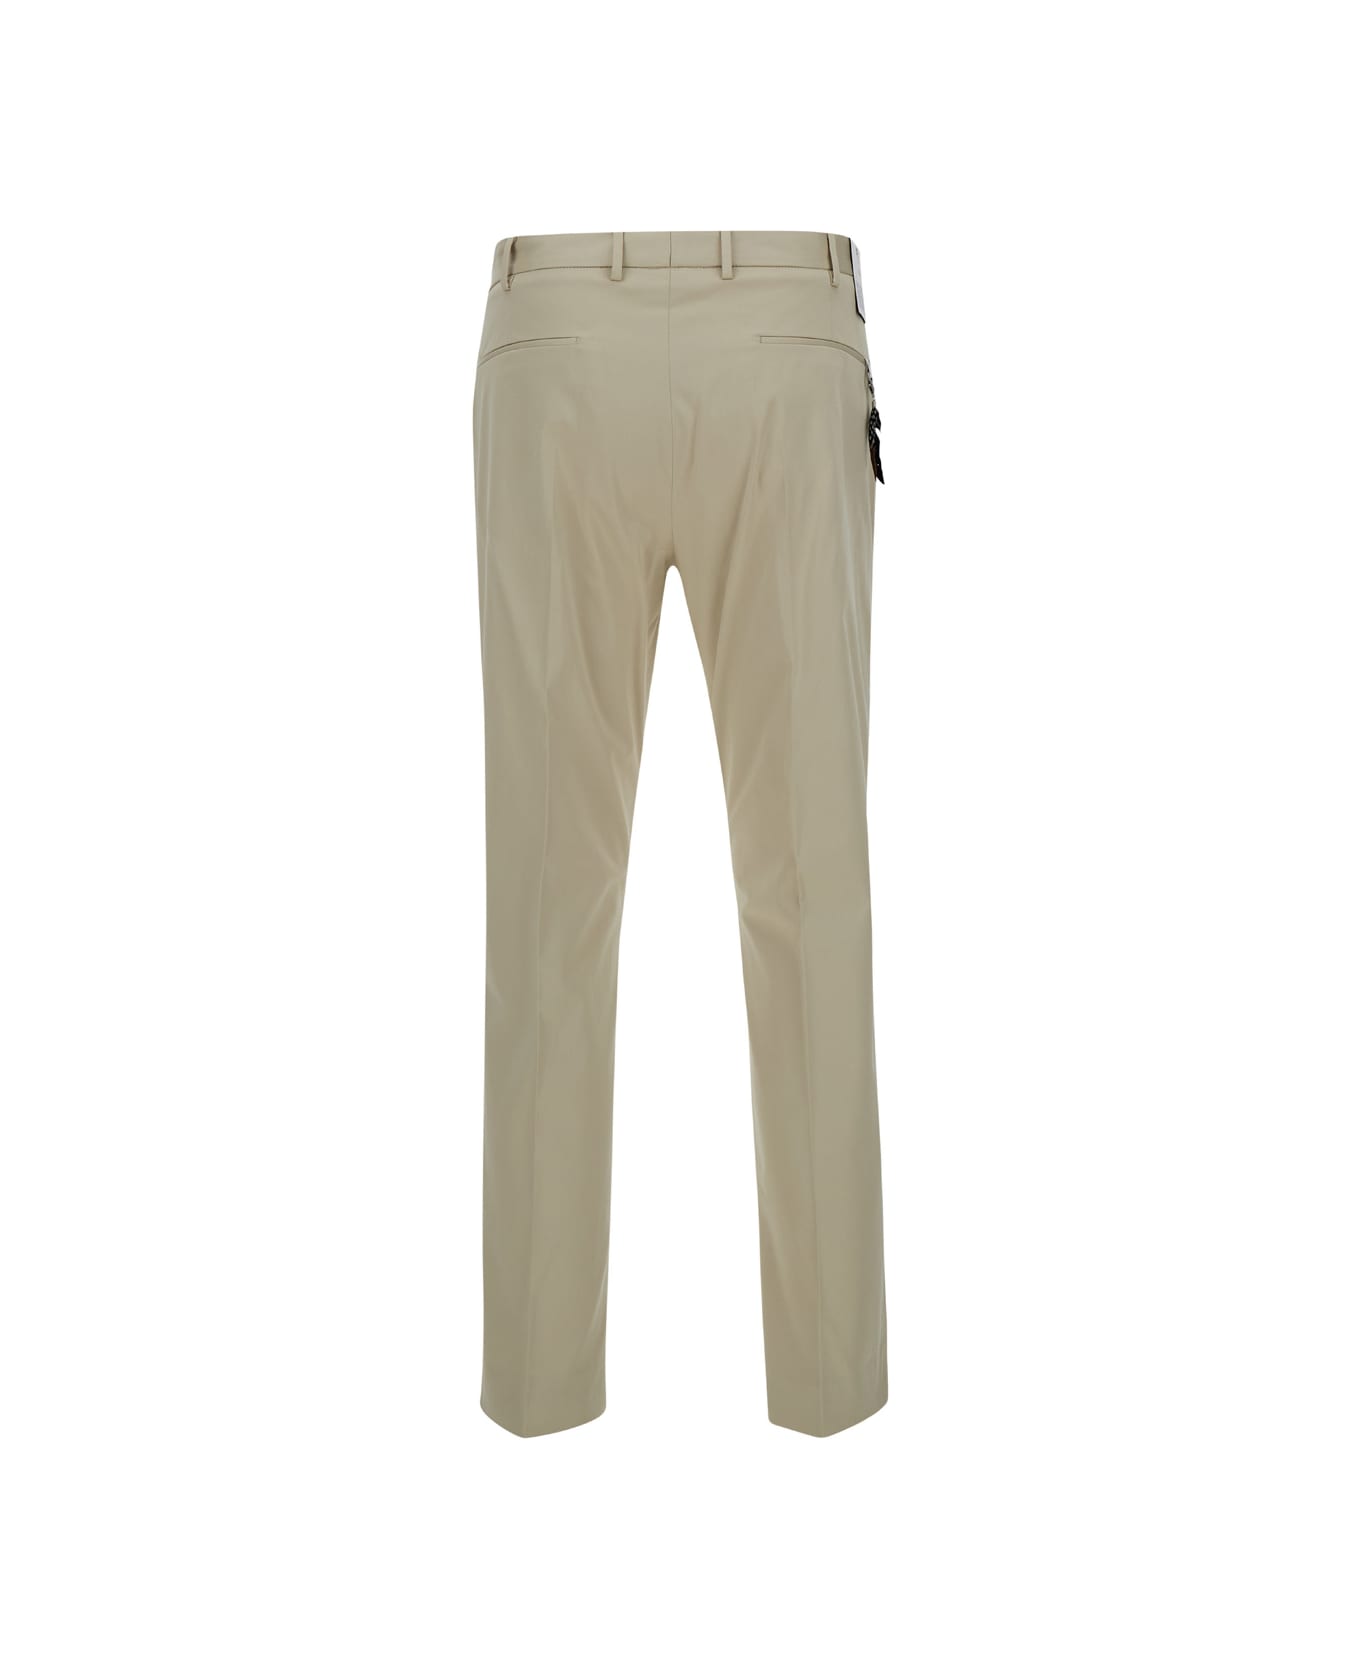 PT01 Beige Slim Fit Trousers In Cotton Blend Man - Beige